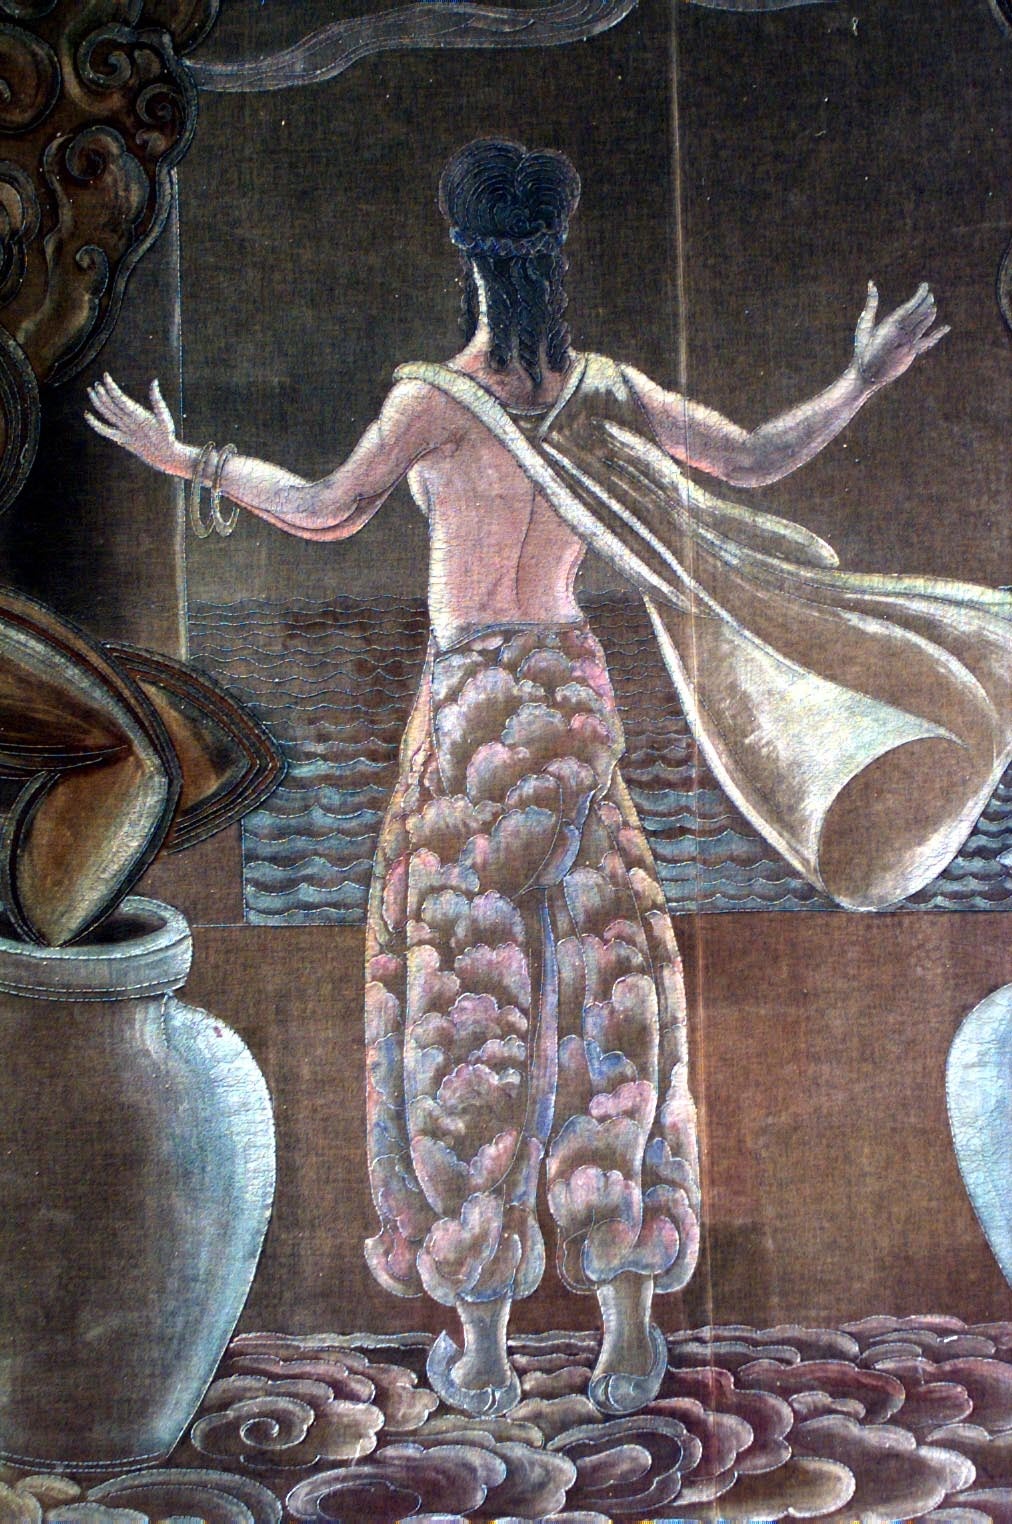 Amerikanischer Art Deco (1928) vertikaler bemalter Samt-Wandbehang einer persischen Dame mit 2 Urnen (GRANT SIMON zugeschrieben).
